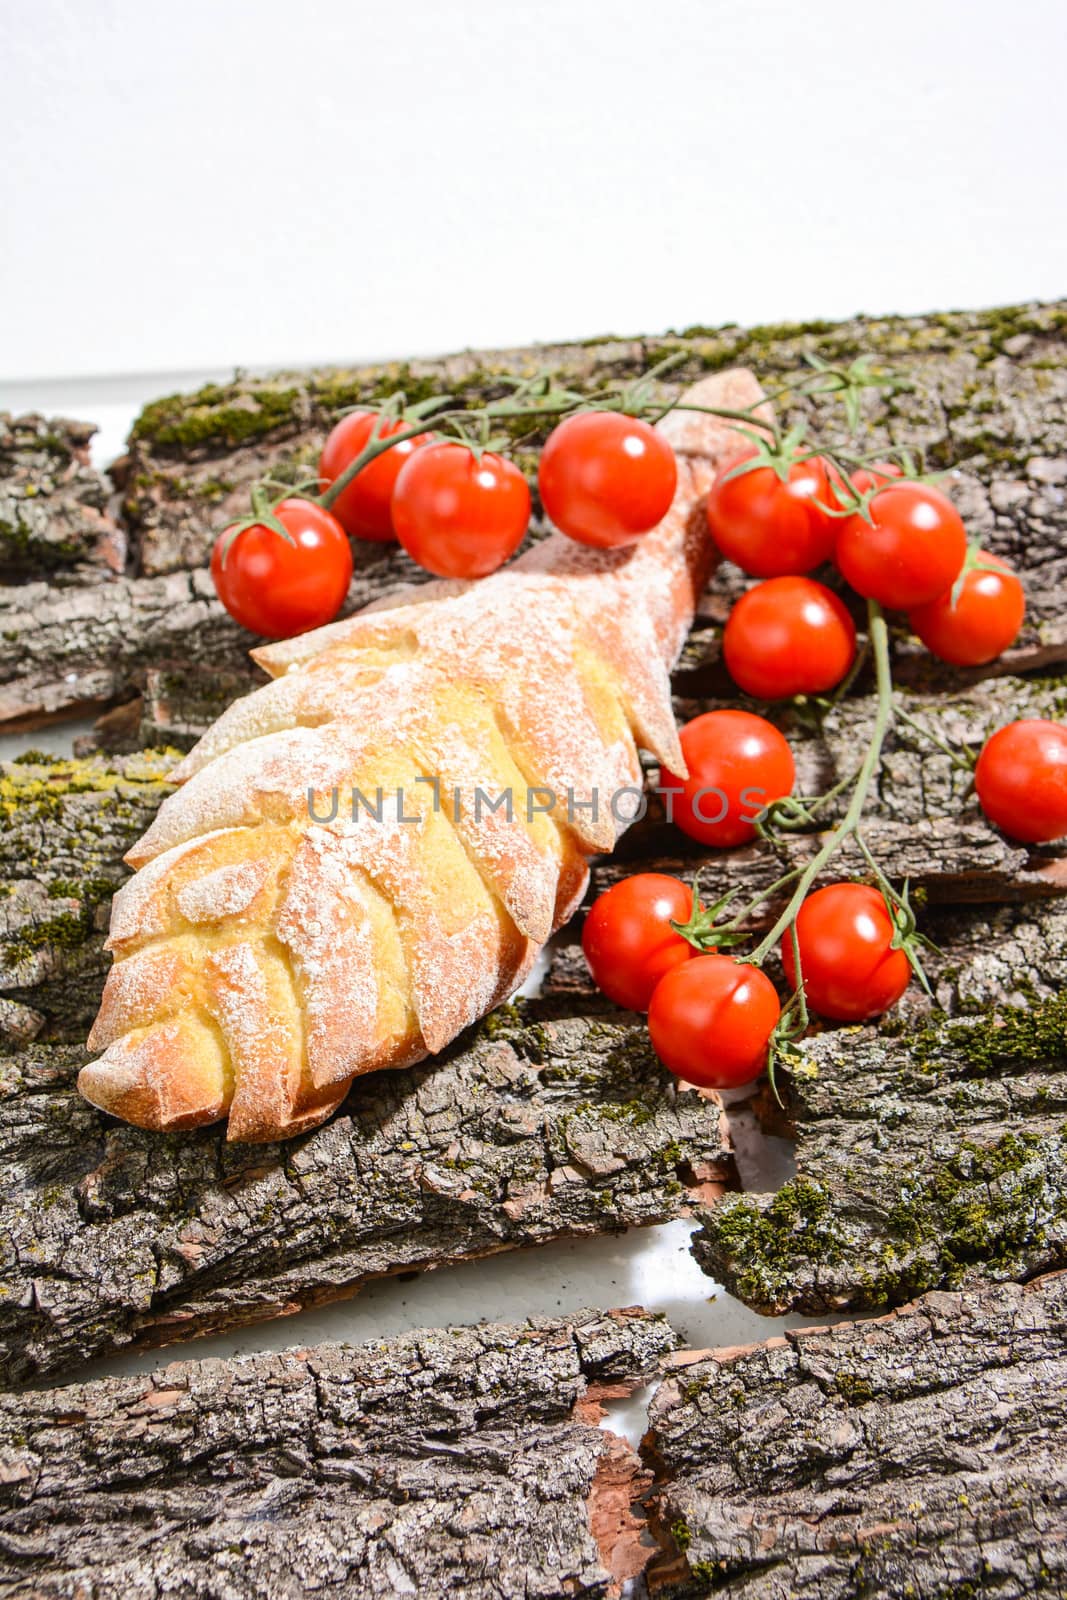 homemade Italian food: bread from durum wheat flour